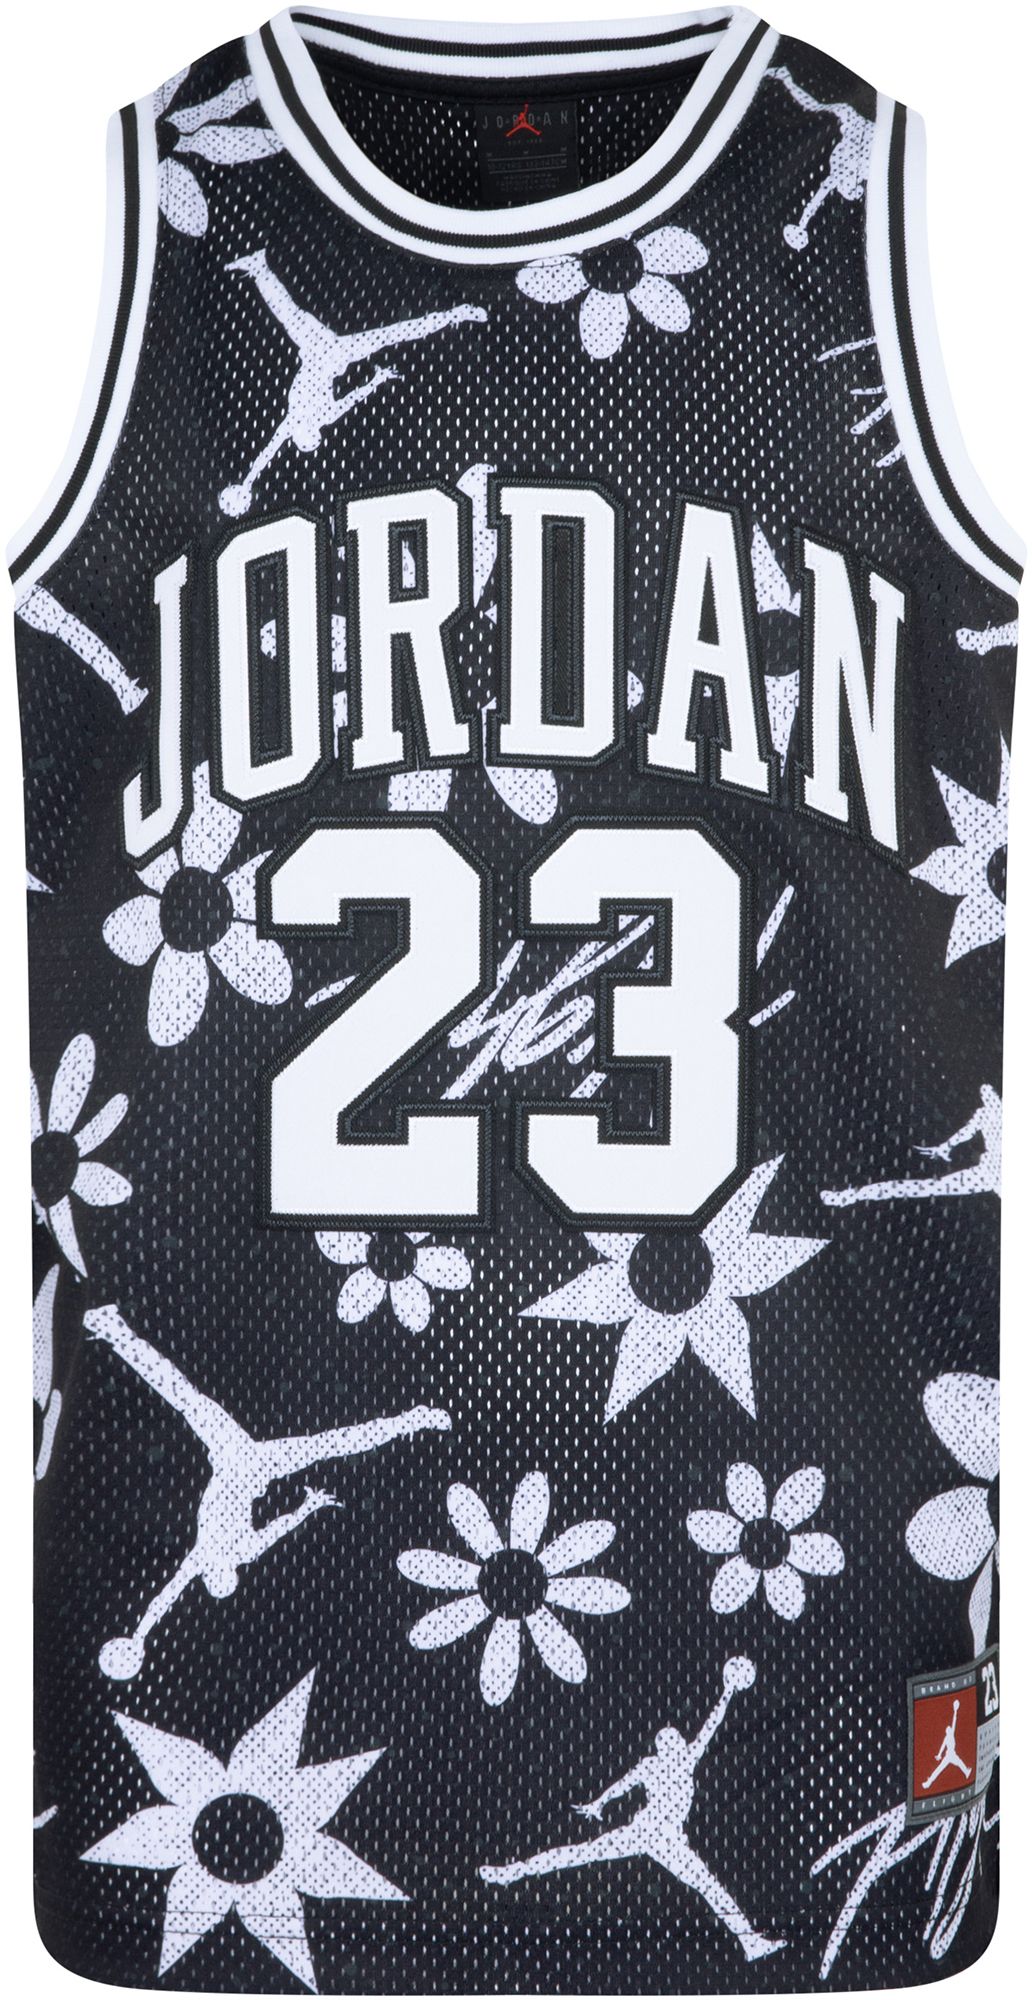 Jordan Kids 23 Jersey